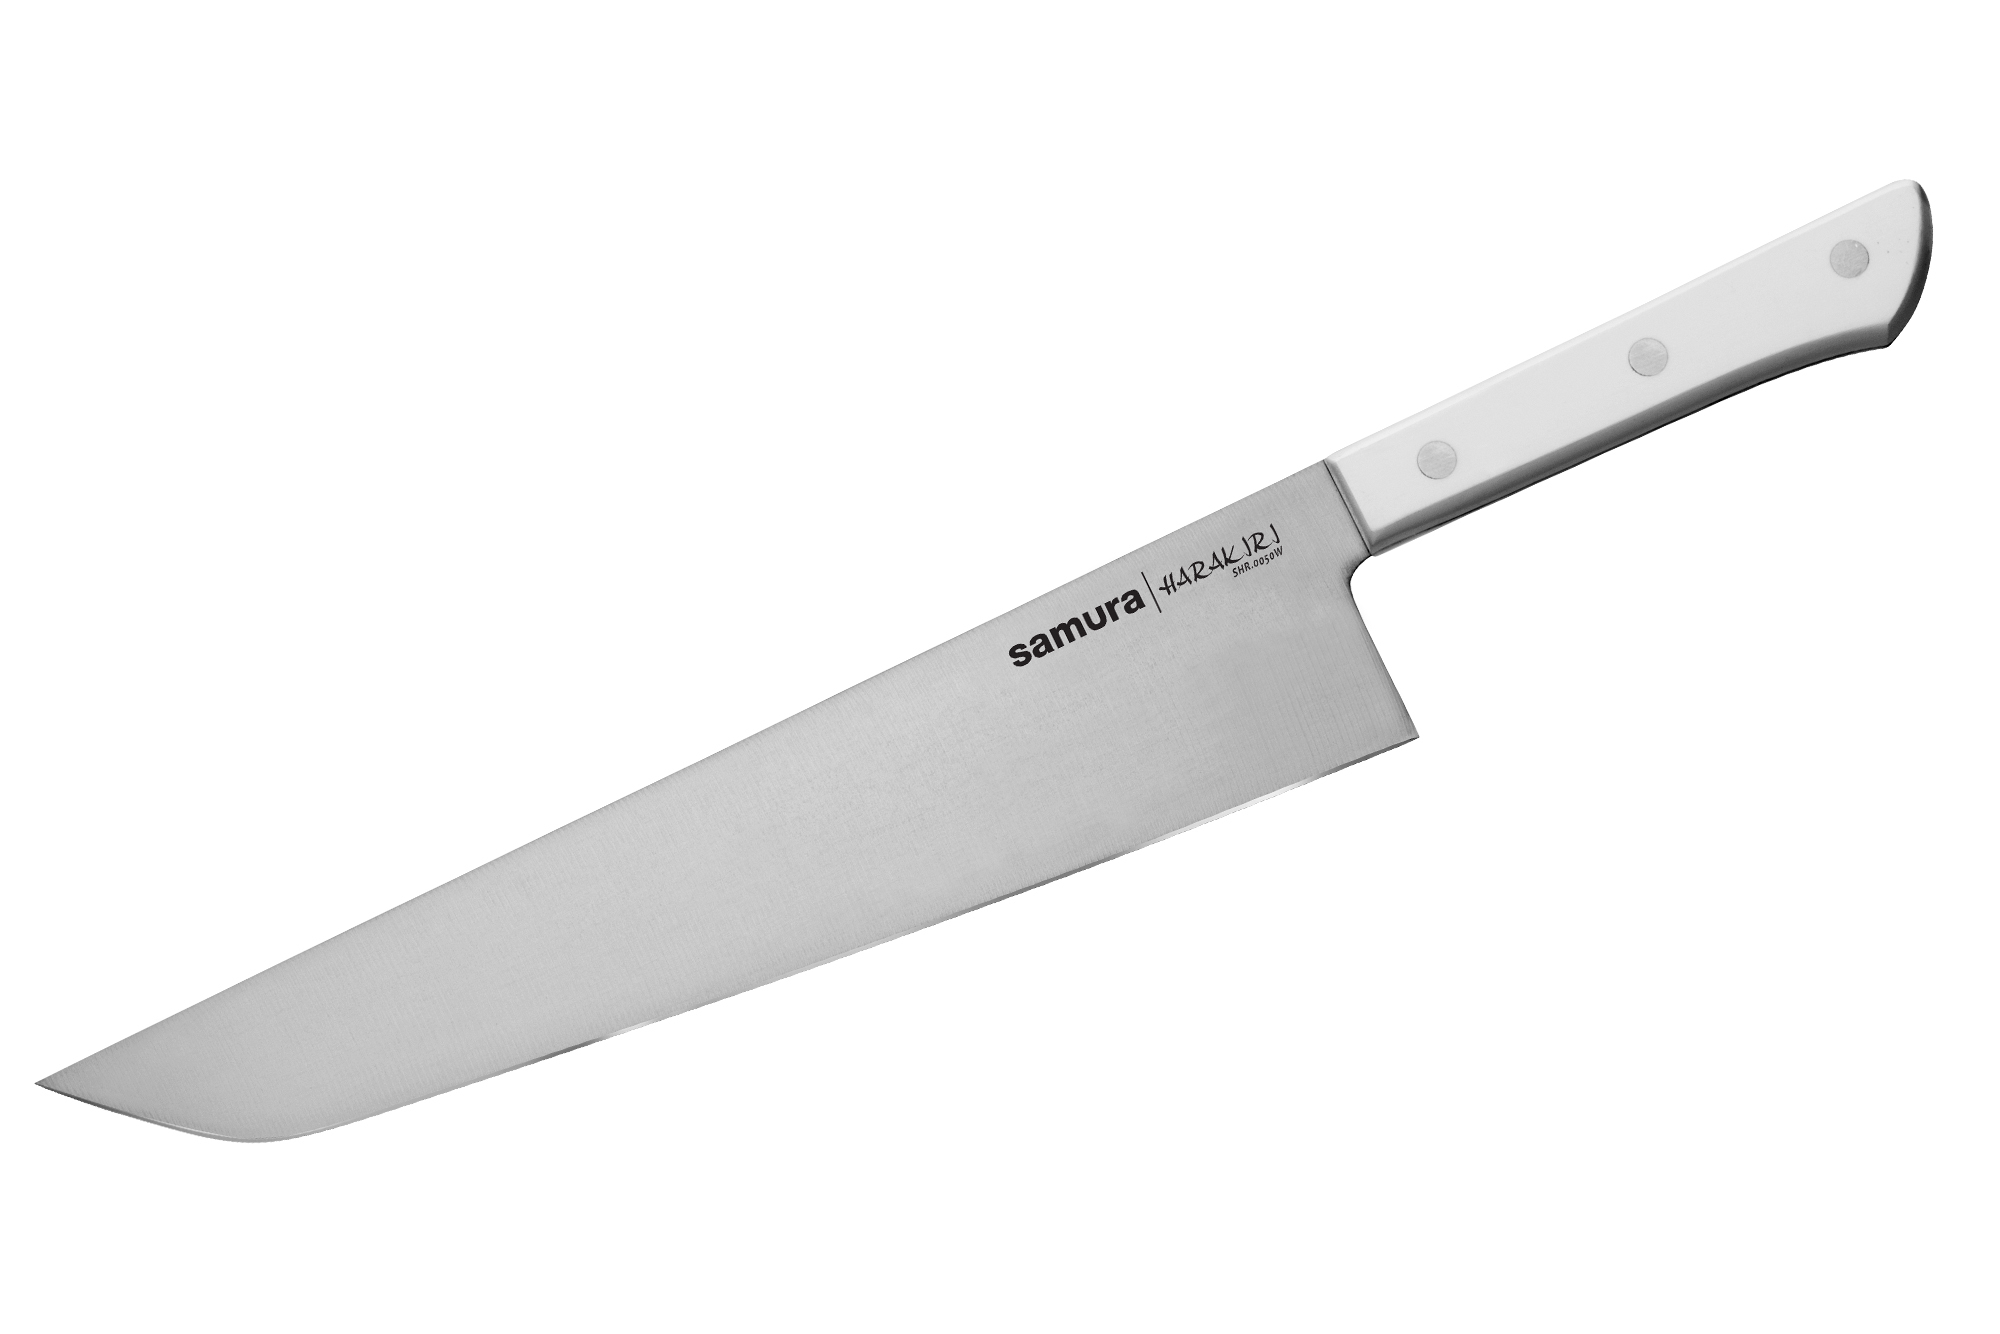 Кухонный нож Samura Harakiri 254 мм, сталь AUS-8, рукоять пластик, белый нож кухонный samura harakiri гранд шеф 240 мм коррозие стойкая сталь abs пластик